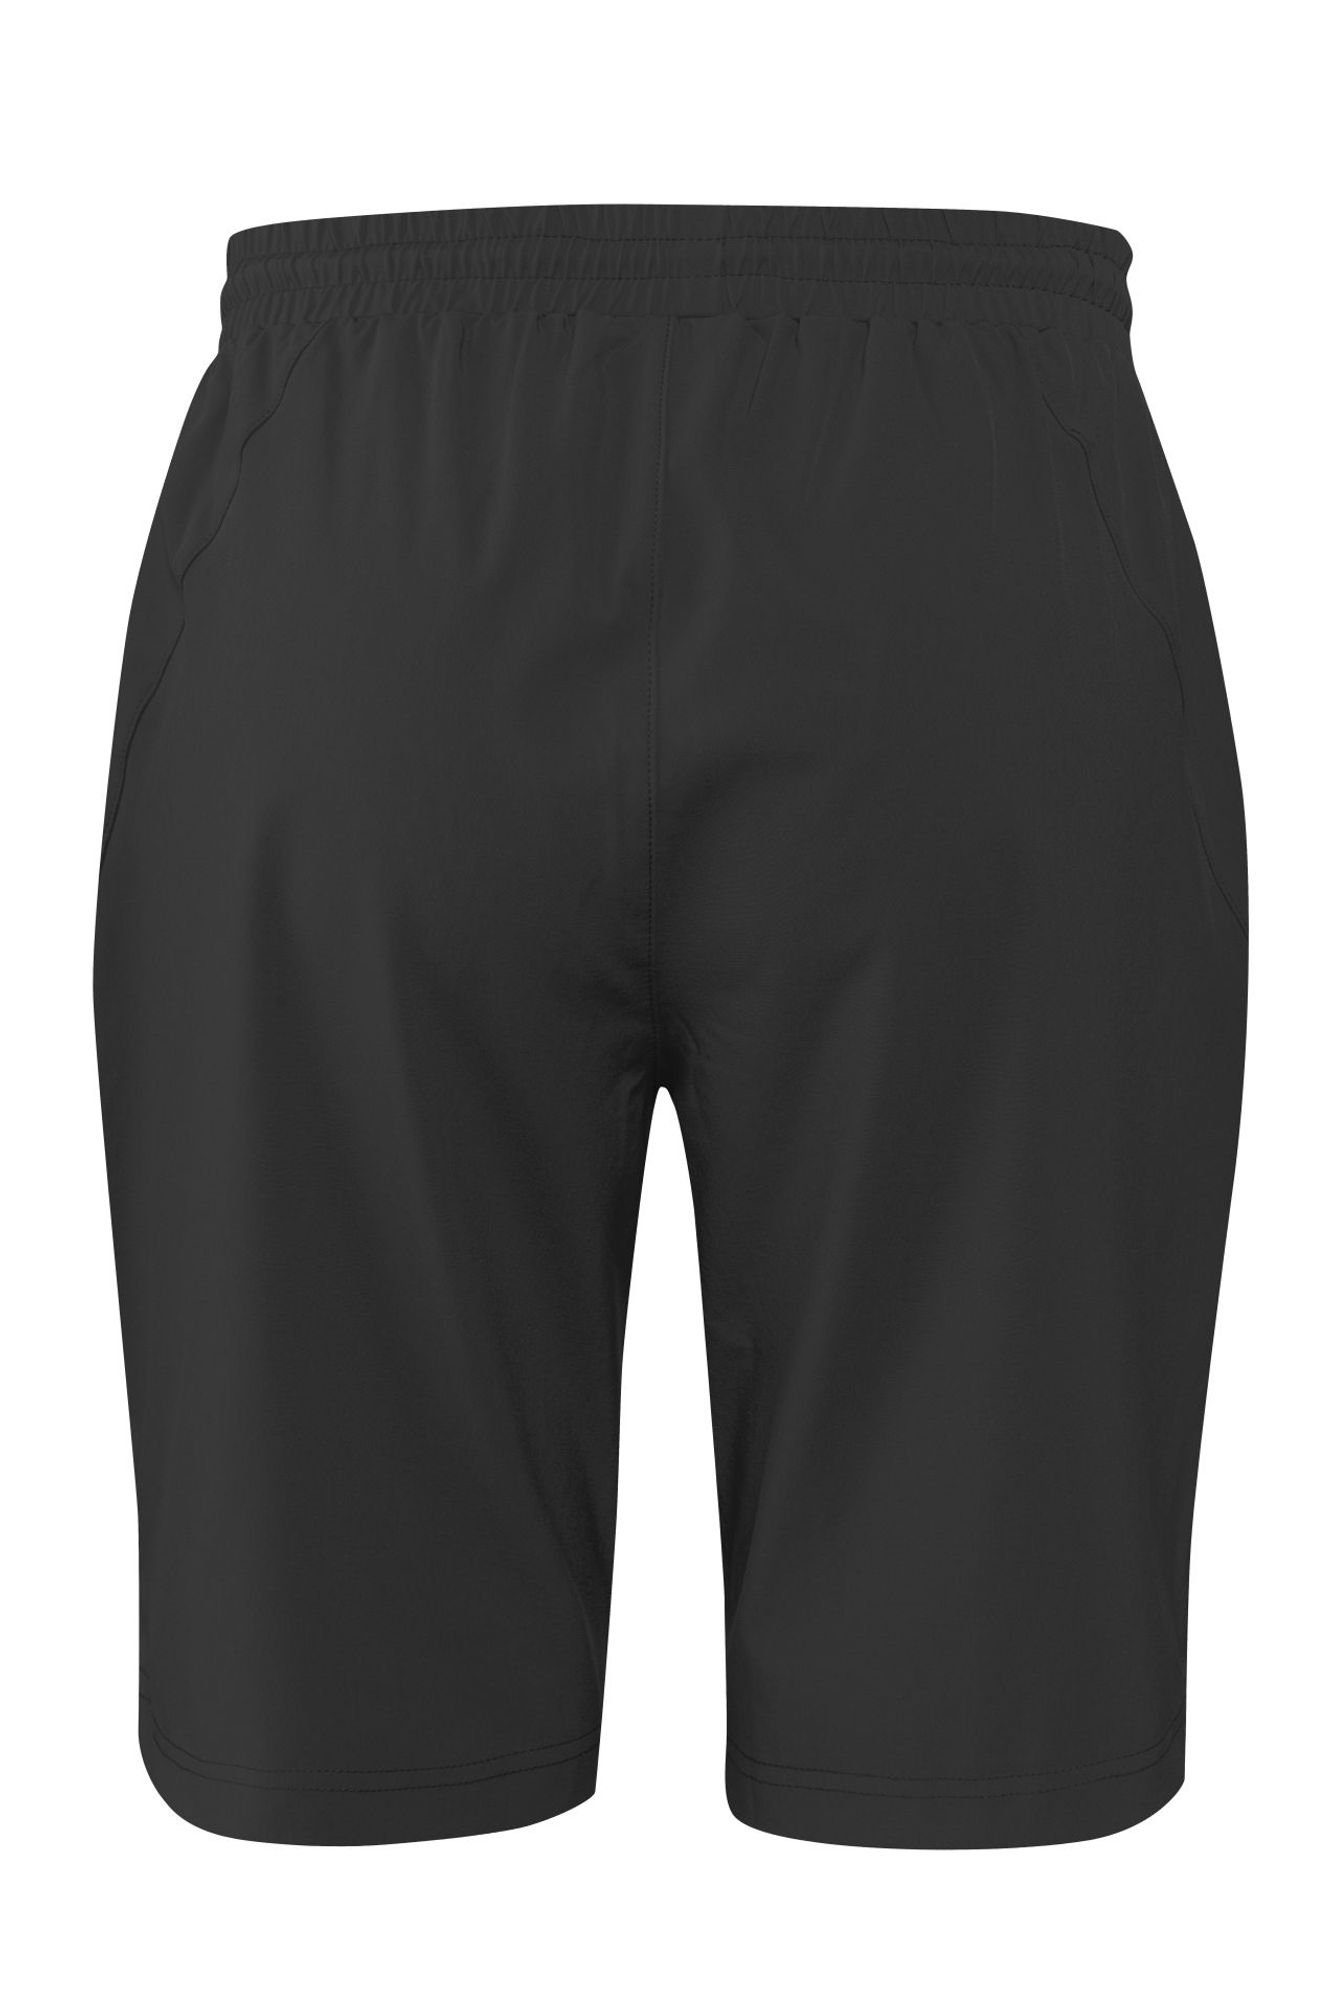 Black Shorts (00700) 36531 Sportswear Sporthose Joy